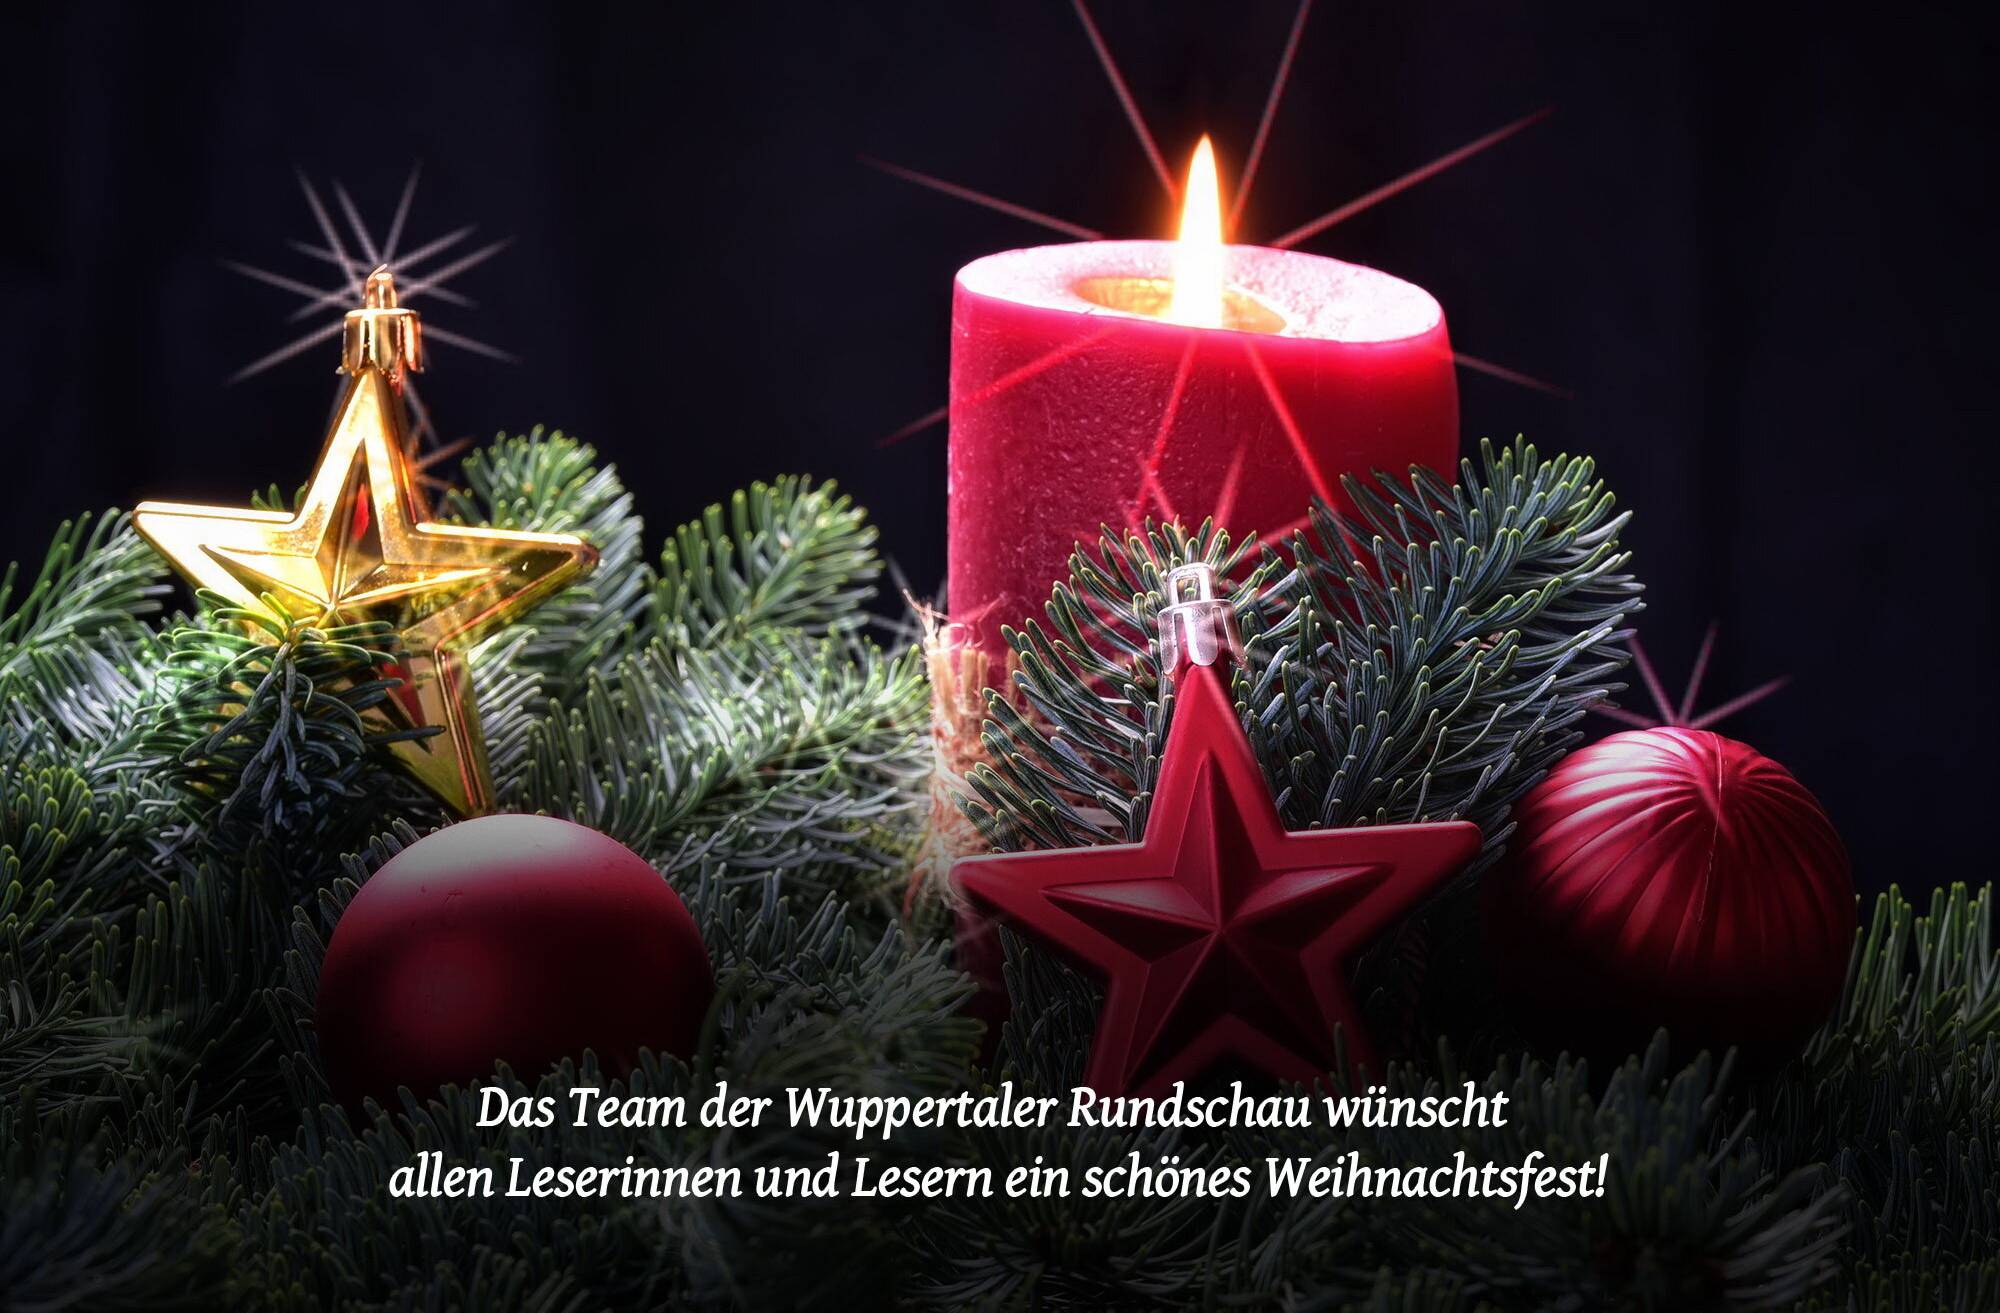 Die Wuppertaler Rundschau wünscht frohe Weihnachten!